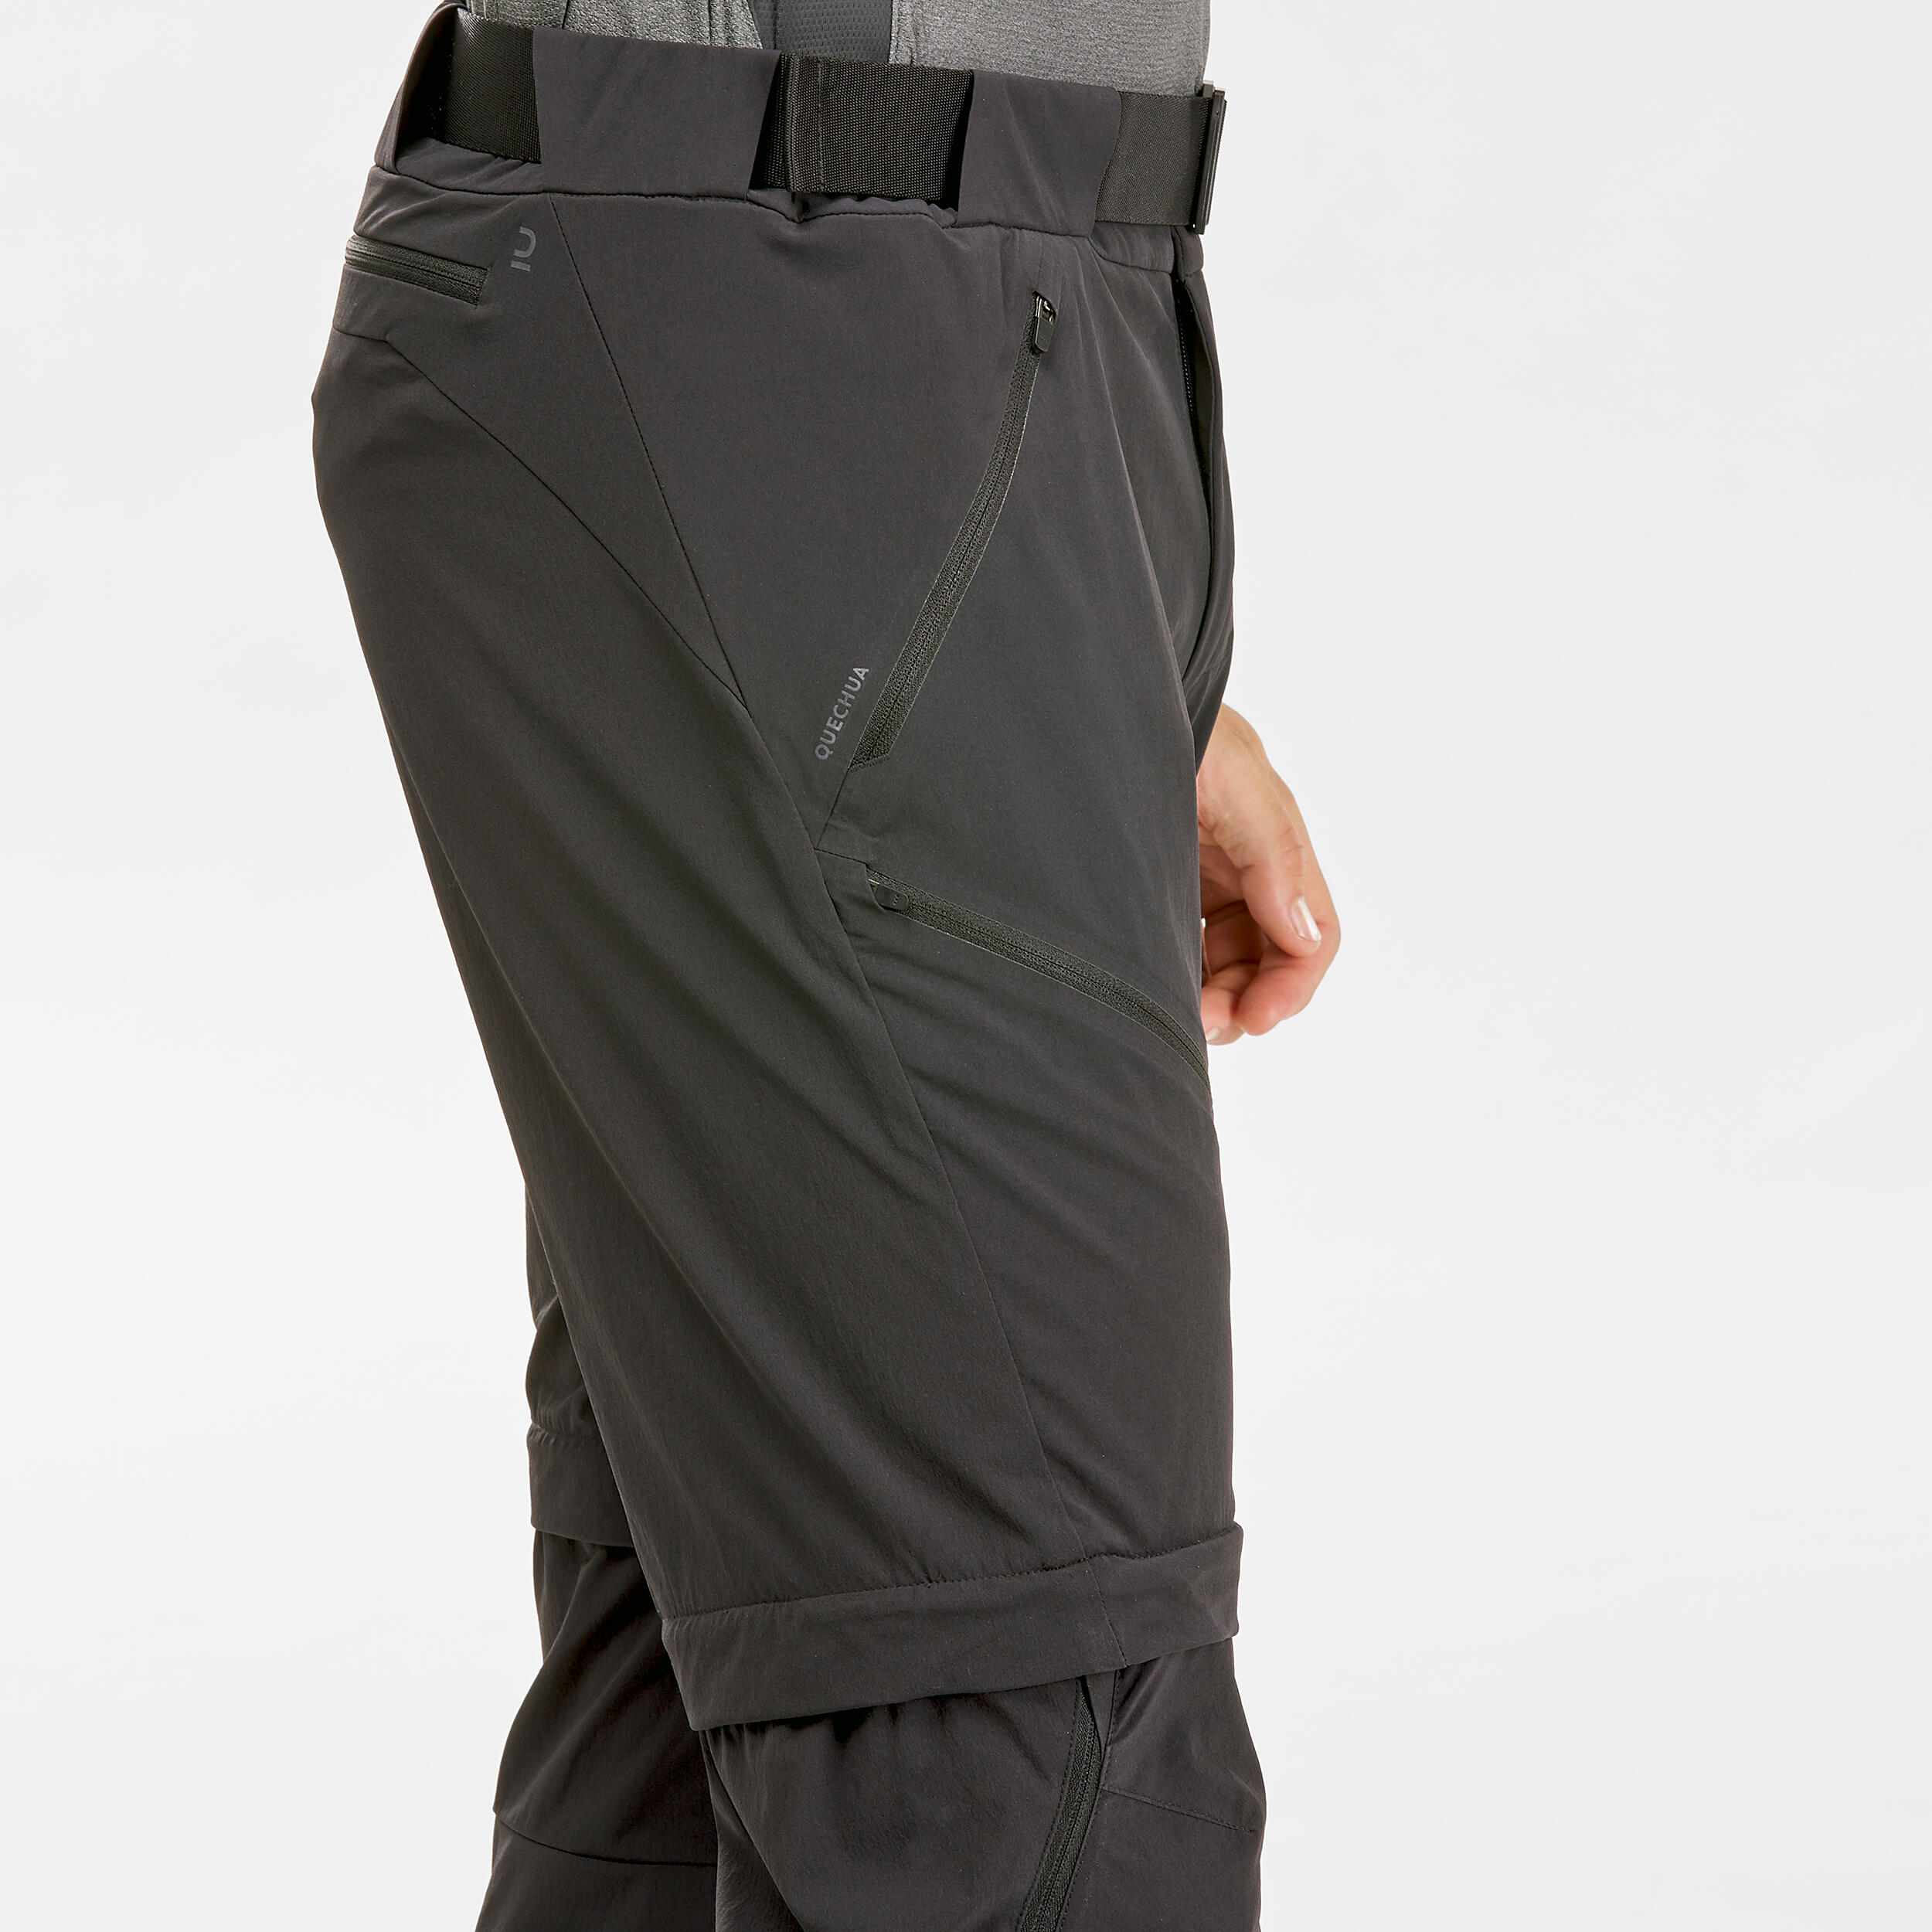 Forclaz Women's MT100 2-in-1 Zip-Off Hiking Pants | How to dye fabric, Pants,  Women